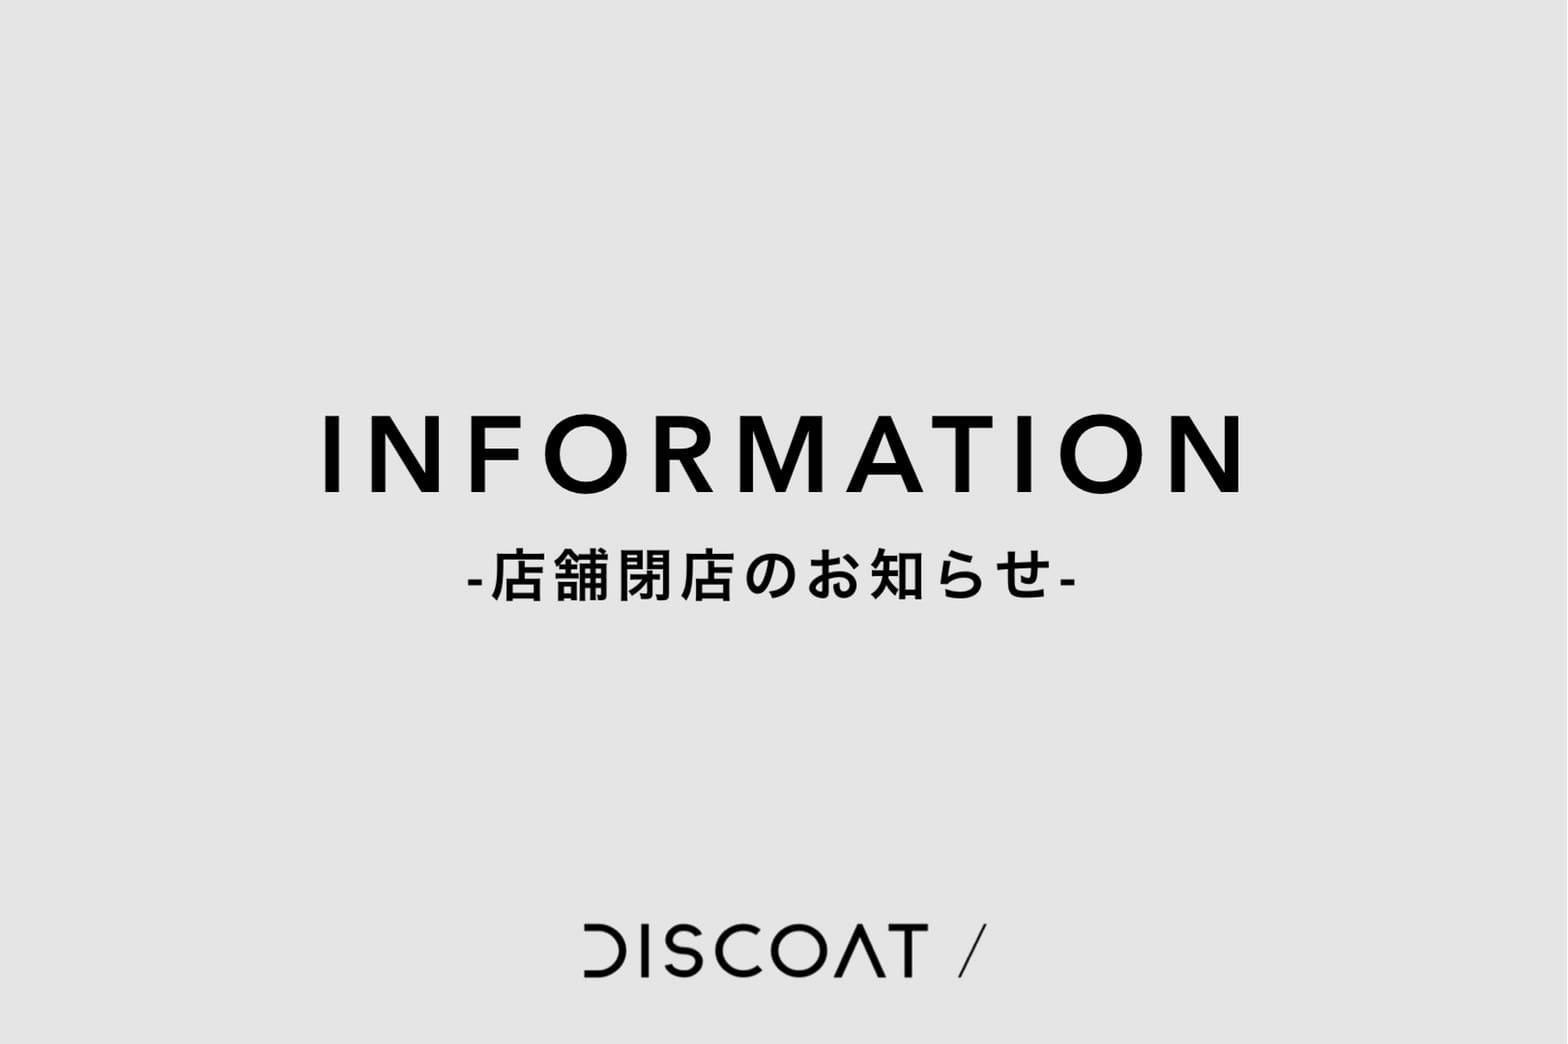 Discoat 【INFORMATION】店舗閉店のお知らせ